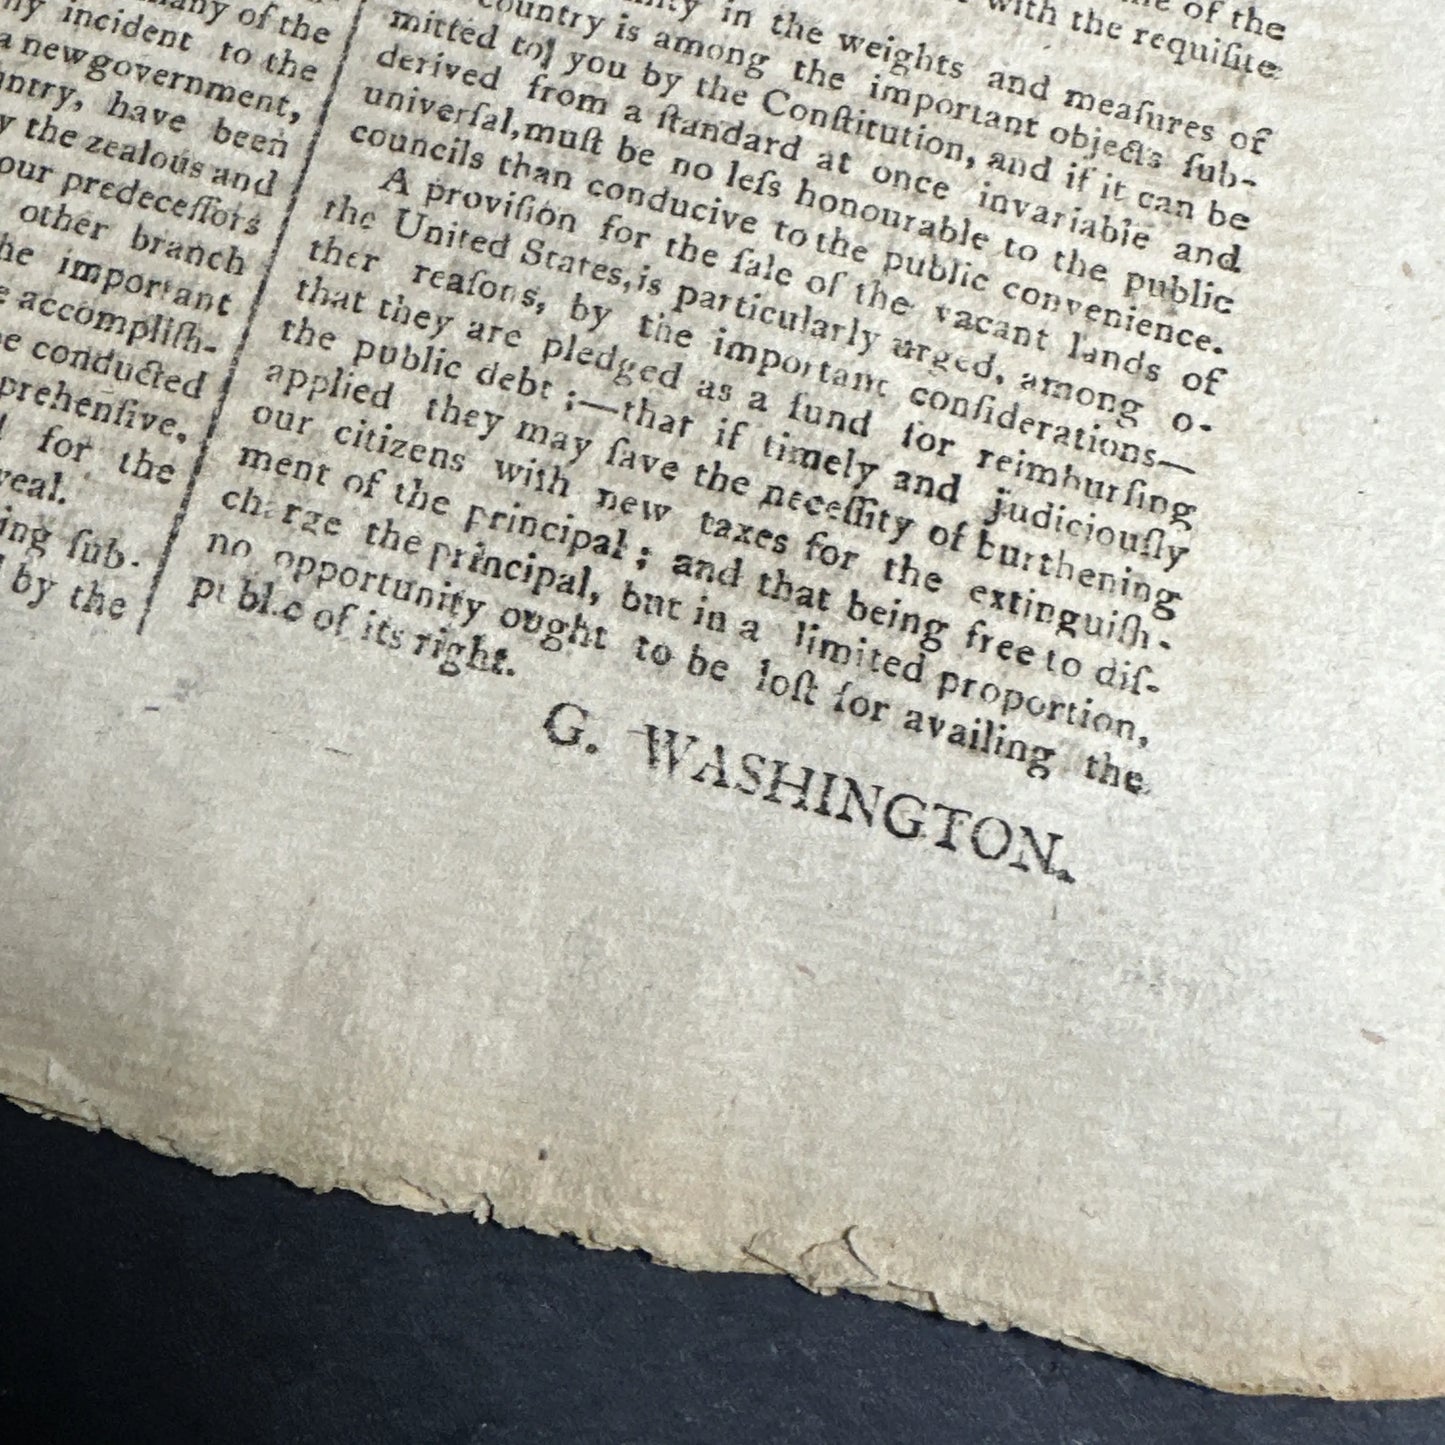 1791 Newspaper reporting Washington’s State of the Union Address